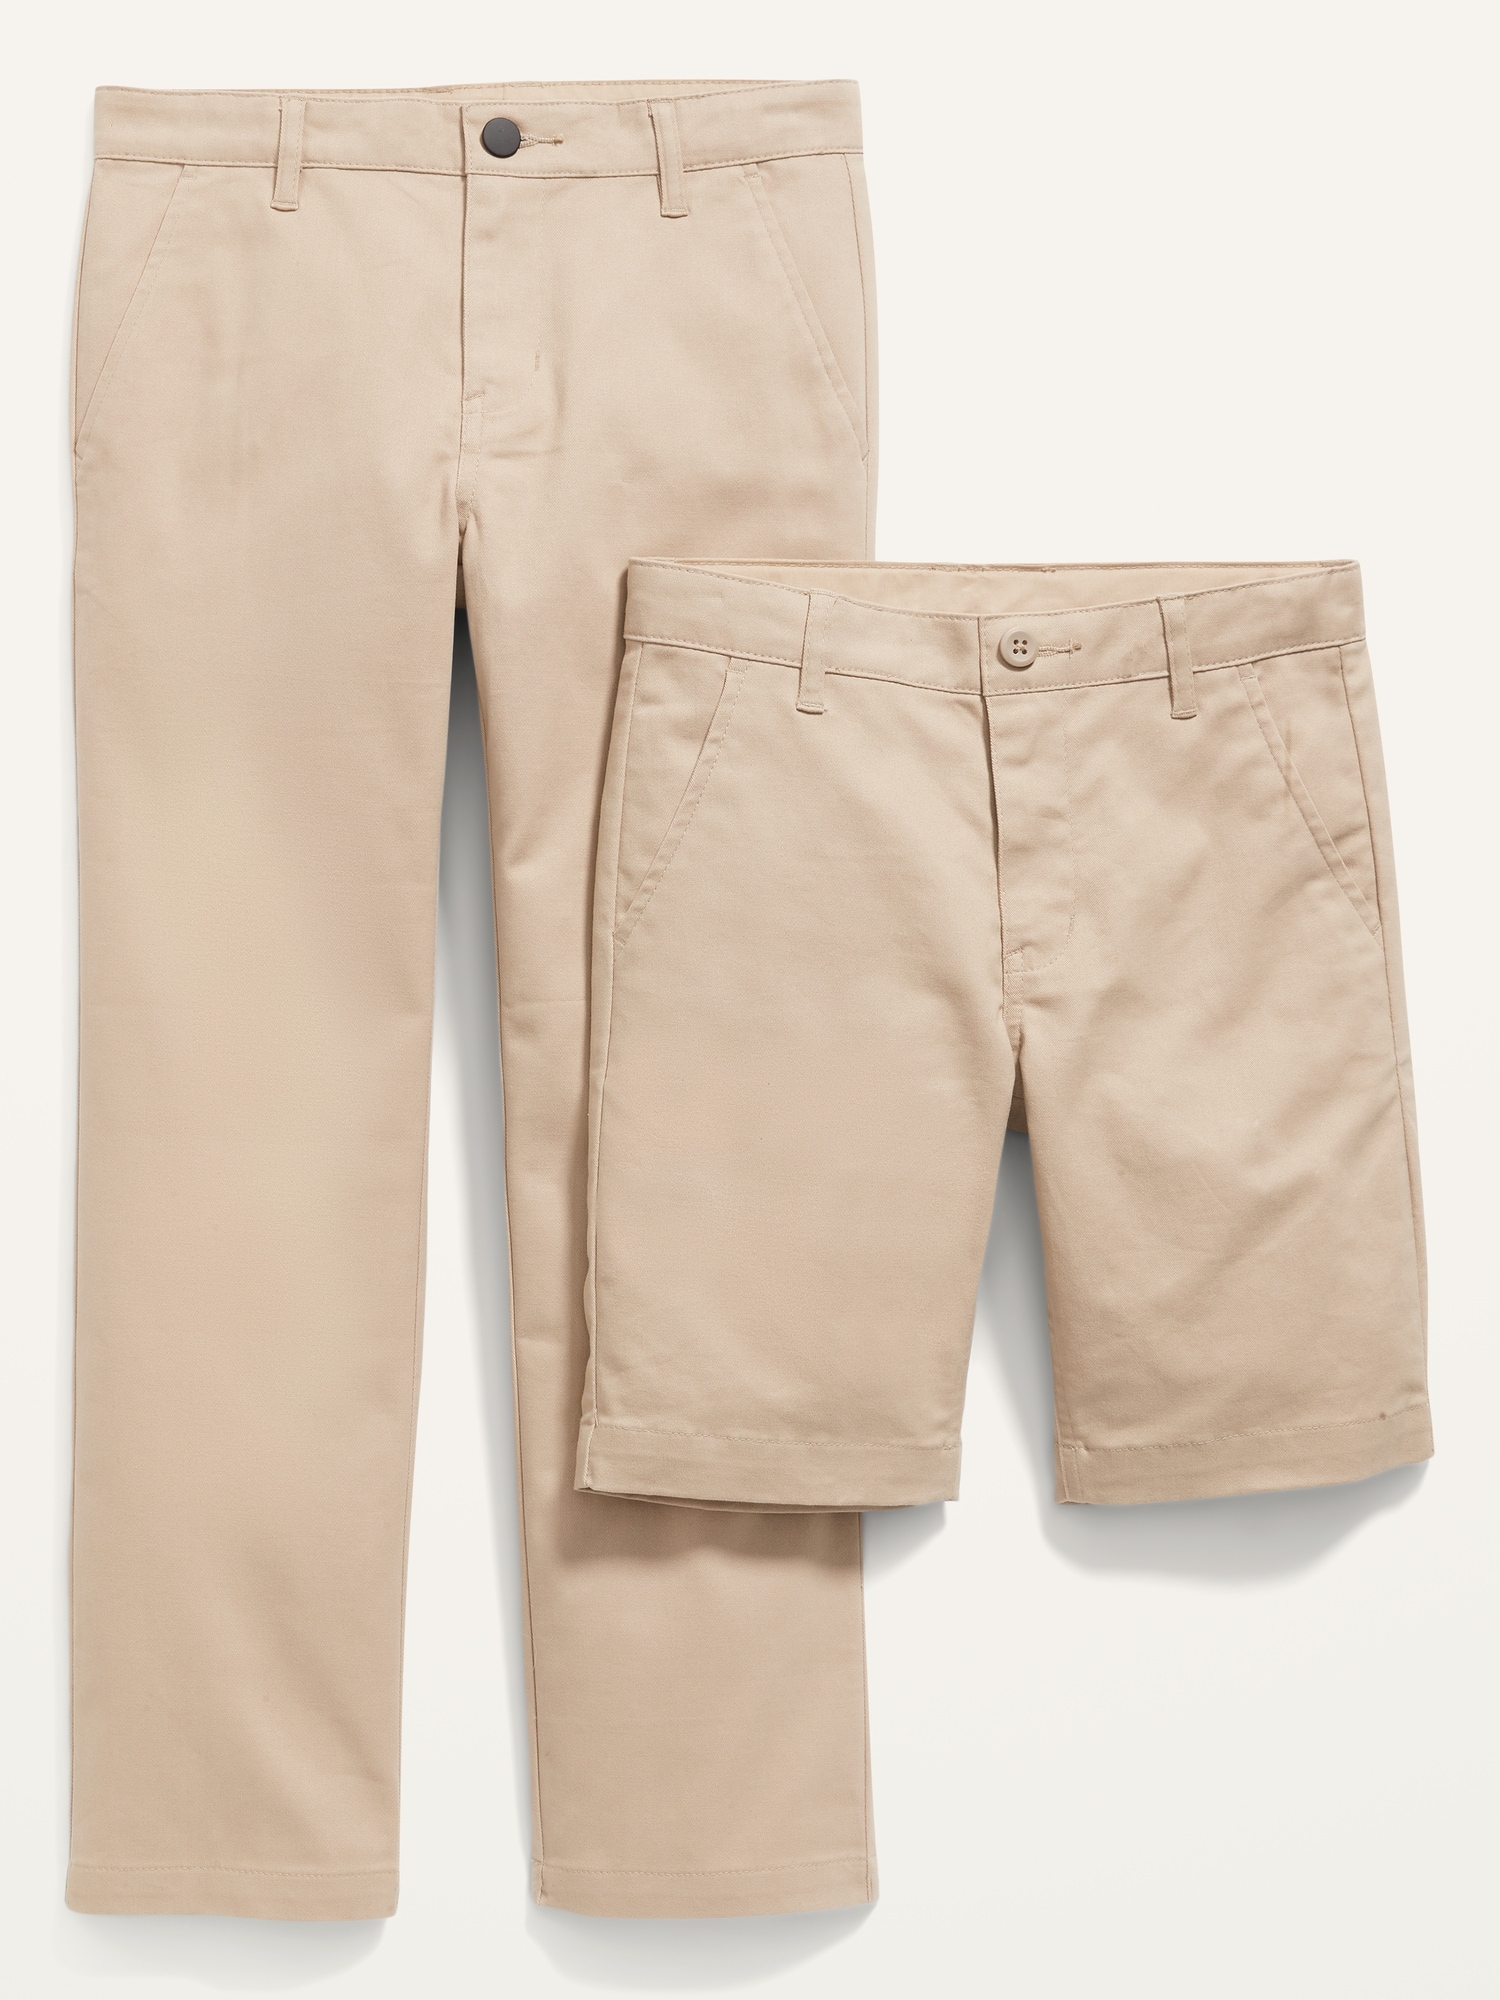 Straight Uniform Pants & Shorts Knee Length 2-Pack for Boys Hot Deal